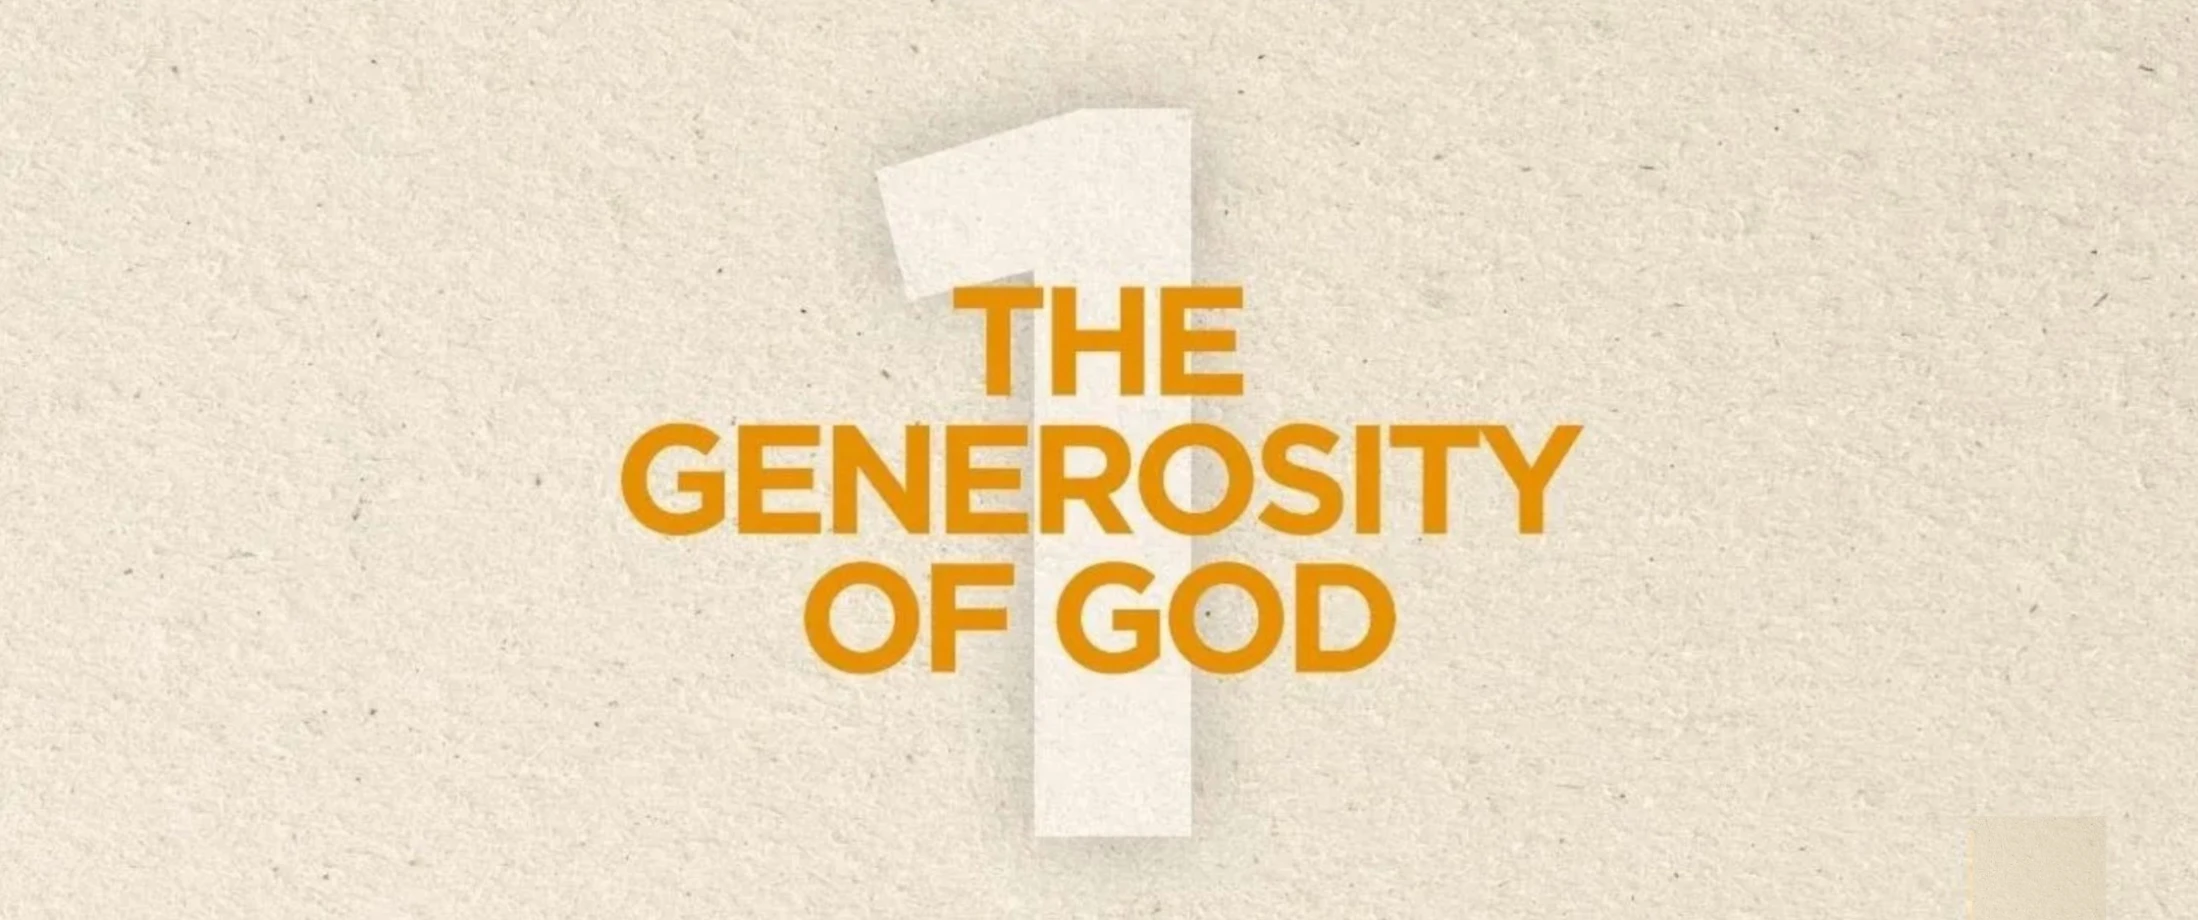 The Generosity of God